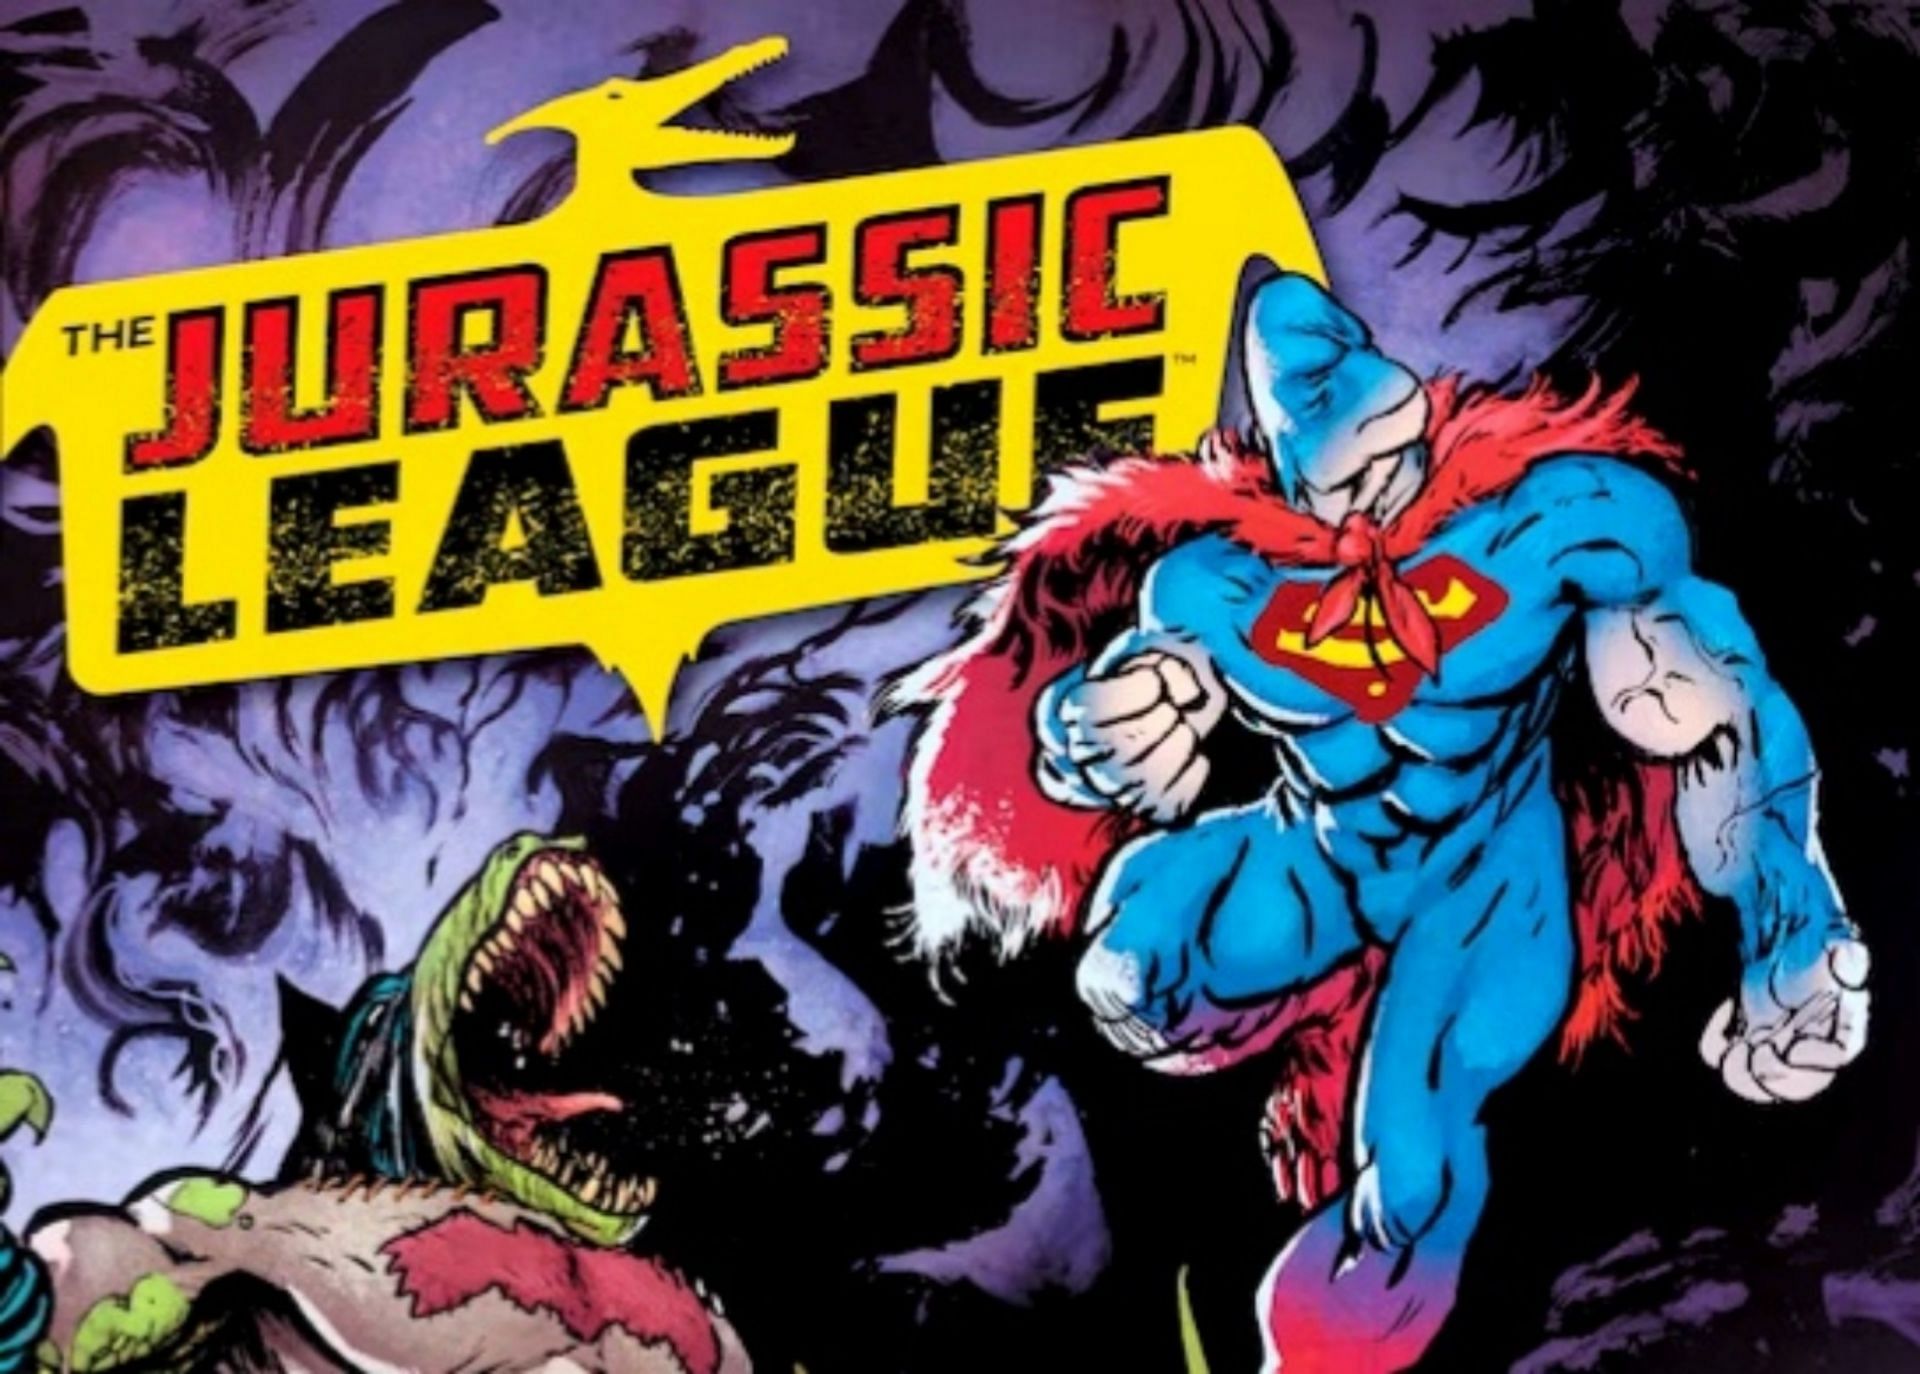 The Jurassic League comic book cover (Image via DC Comics)